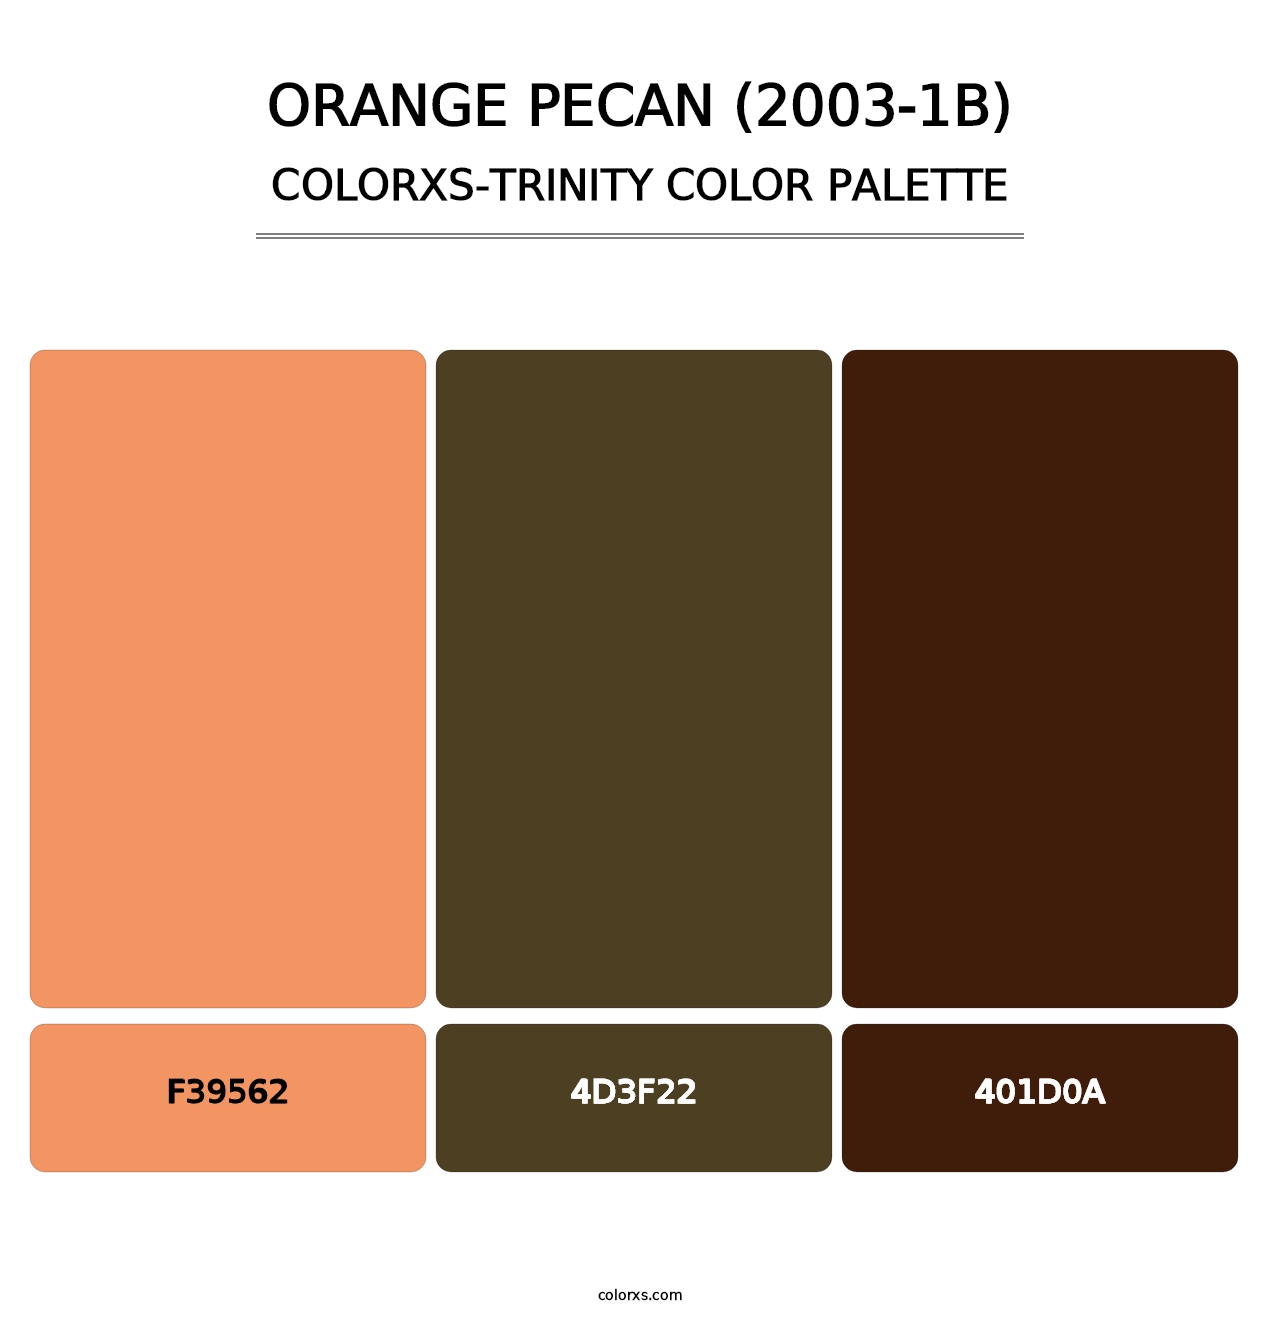 Orange Pecan (2003-1B) - Colorxs Trinity Palette